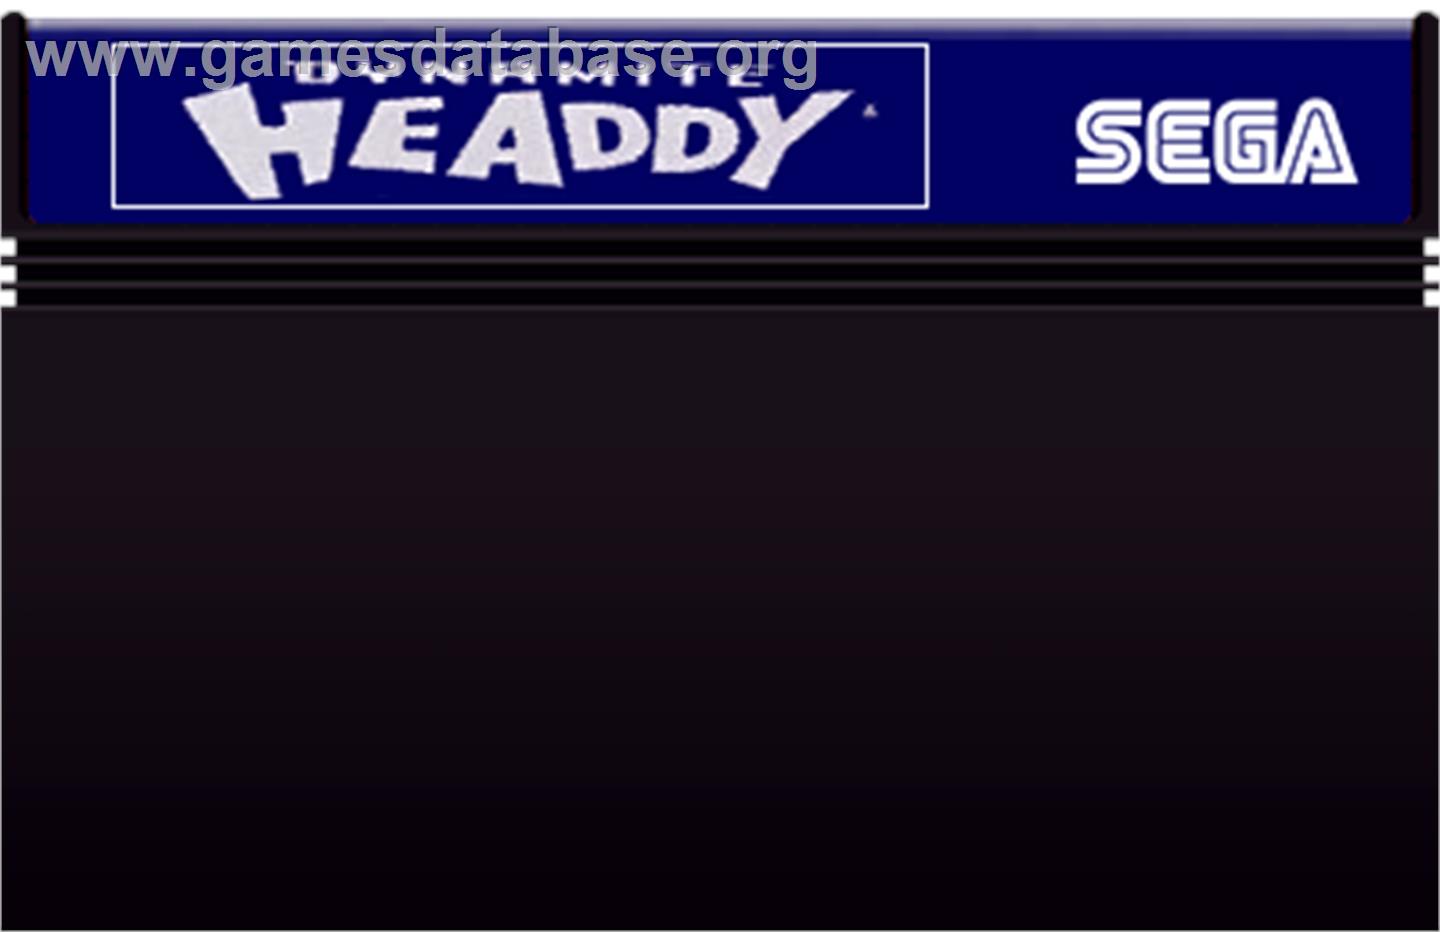 Dynamite Headdy - Sega Master System - Artwork - Cartridge